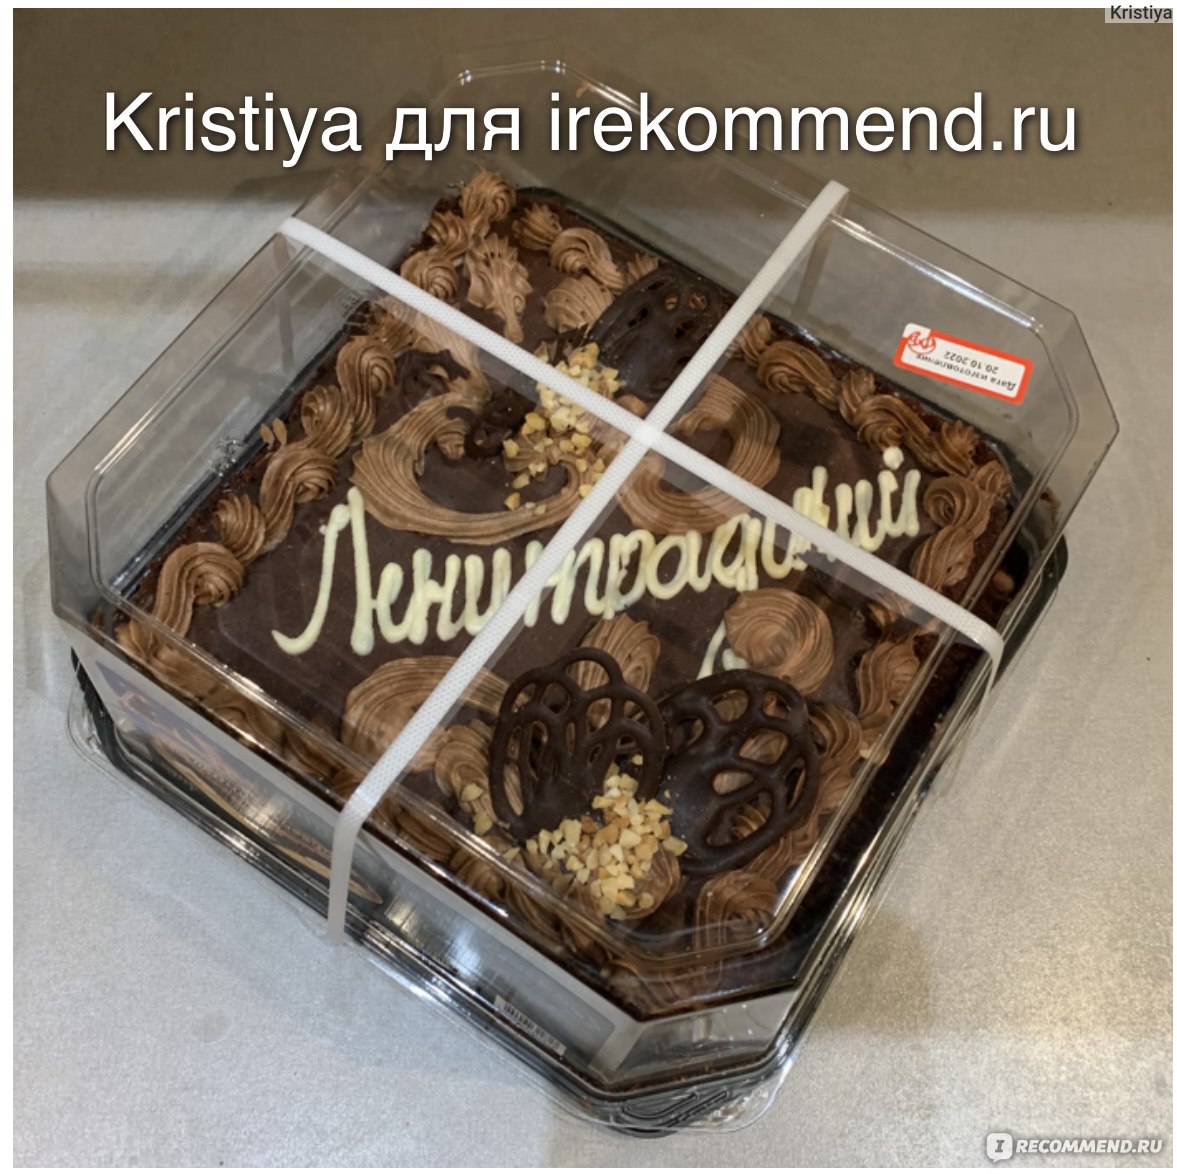 Ленинградский торт Фили Бейкер